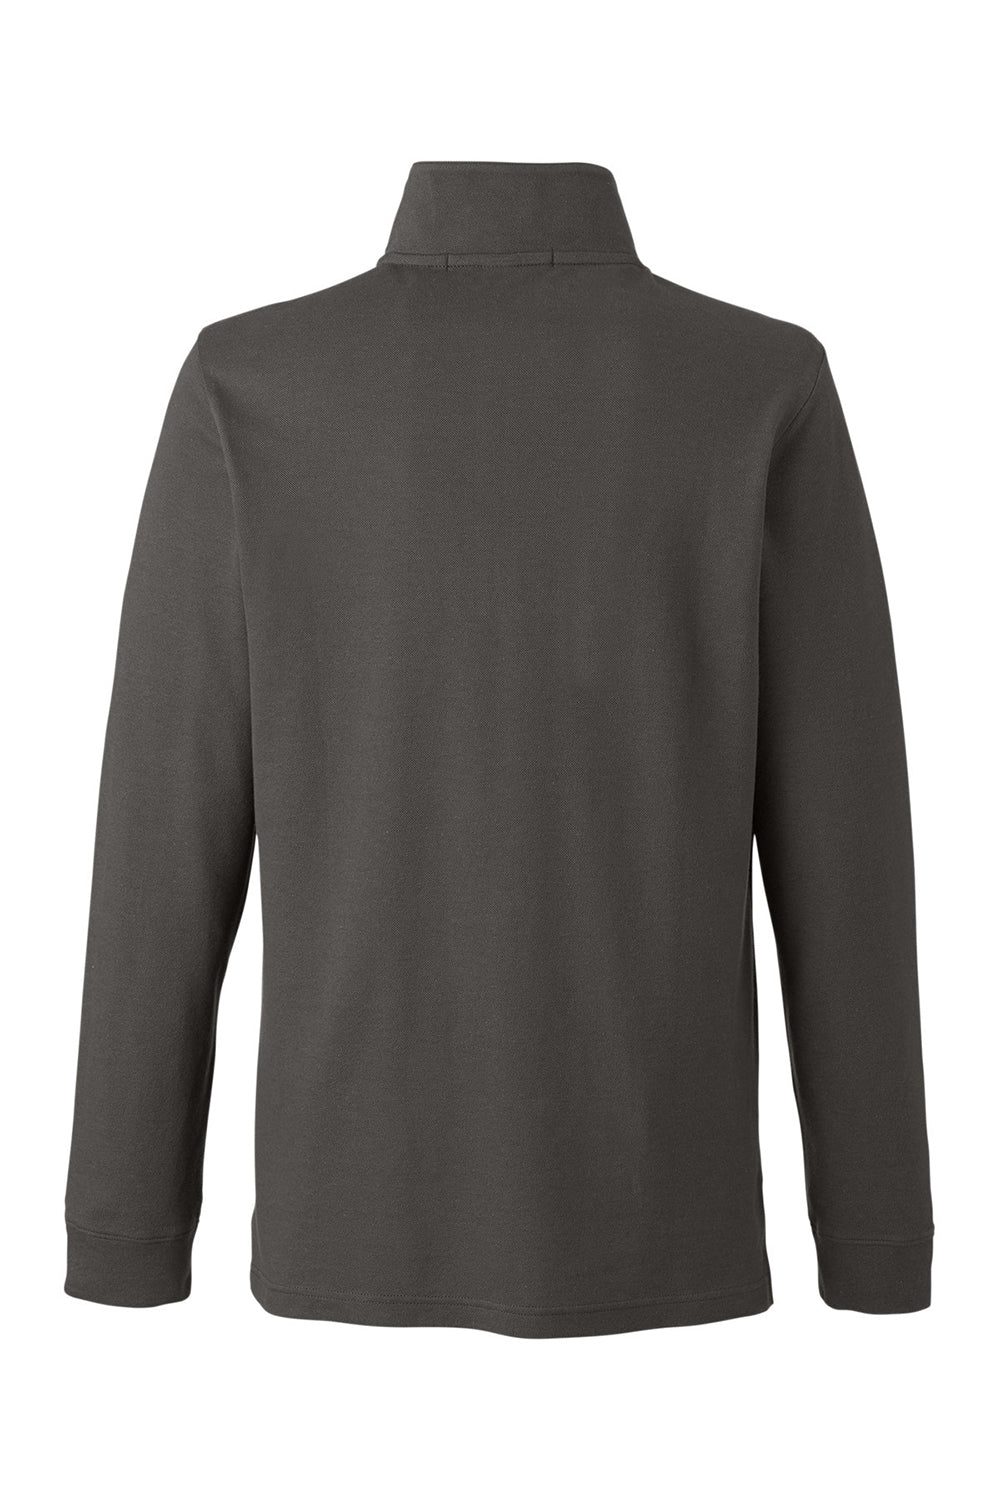 Devon & Jones DG400 Mens New Classics Performance Moisture Wicking 1/4 Zip Sweatshirt Graphite Grey Flat Back